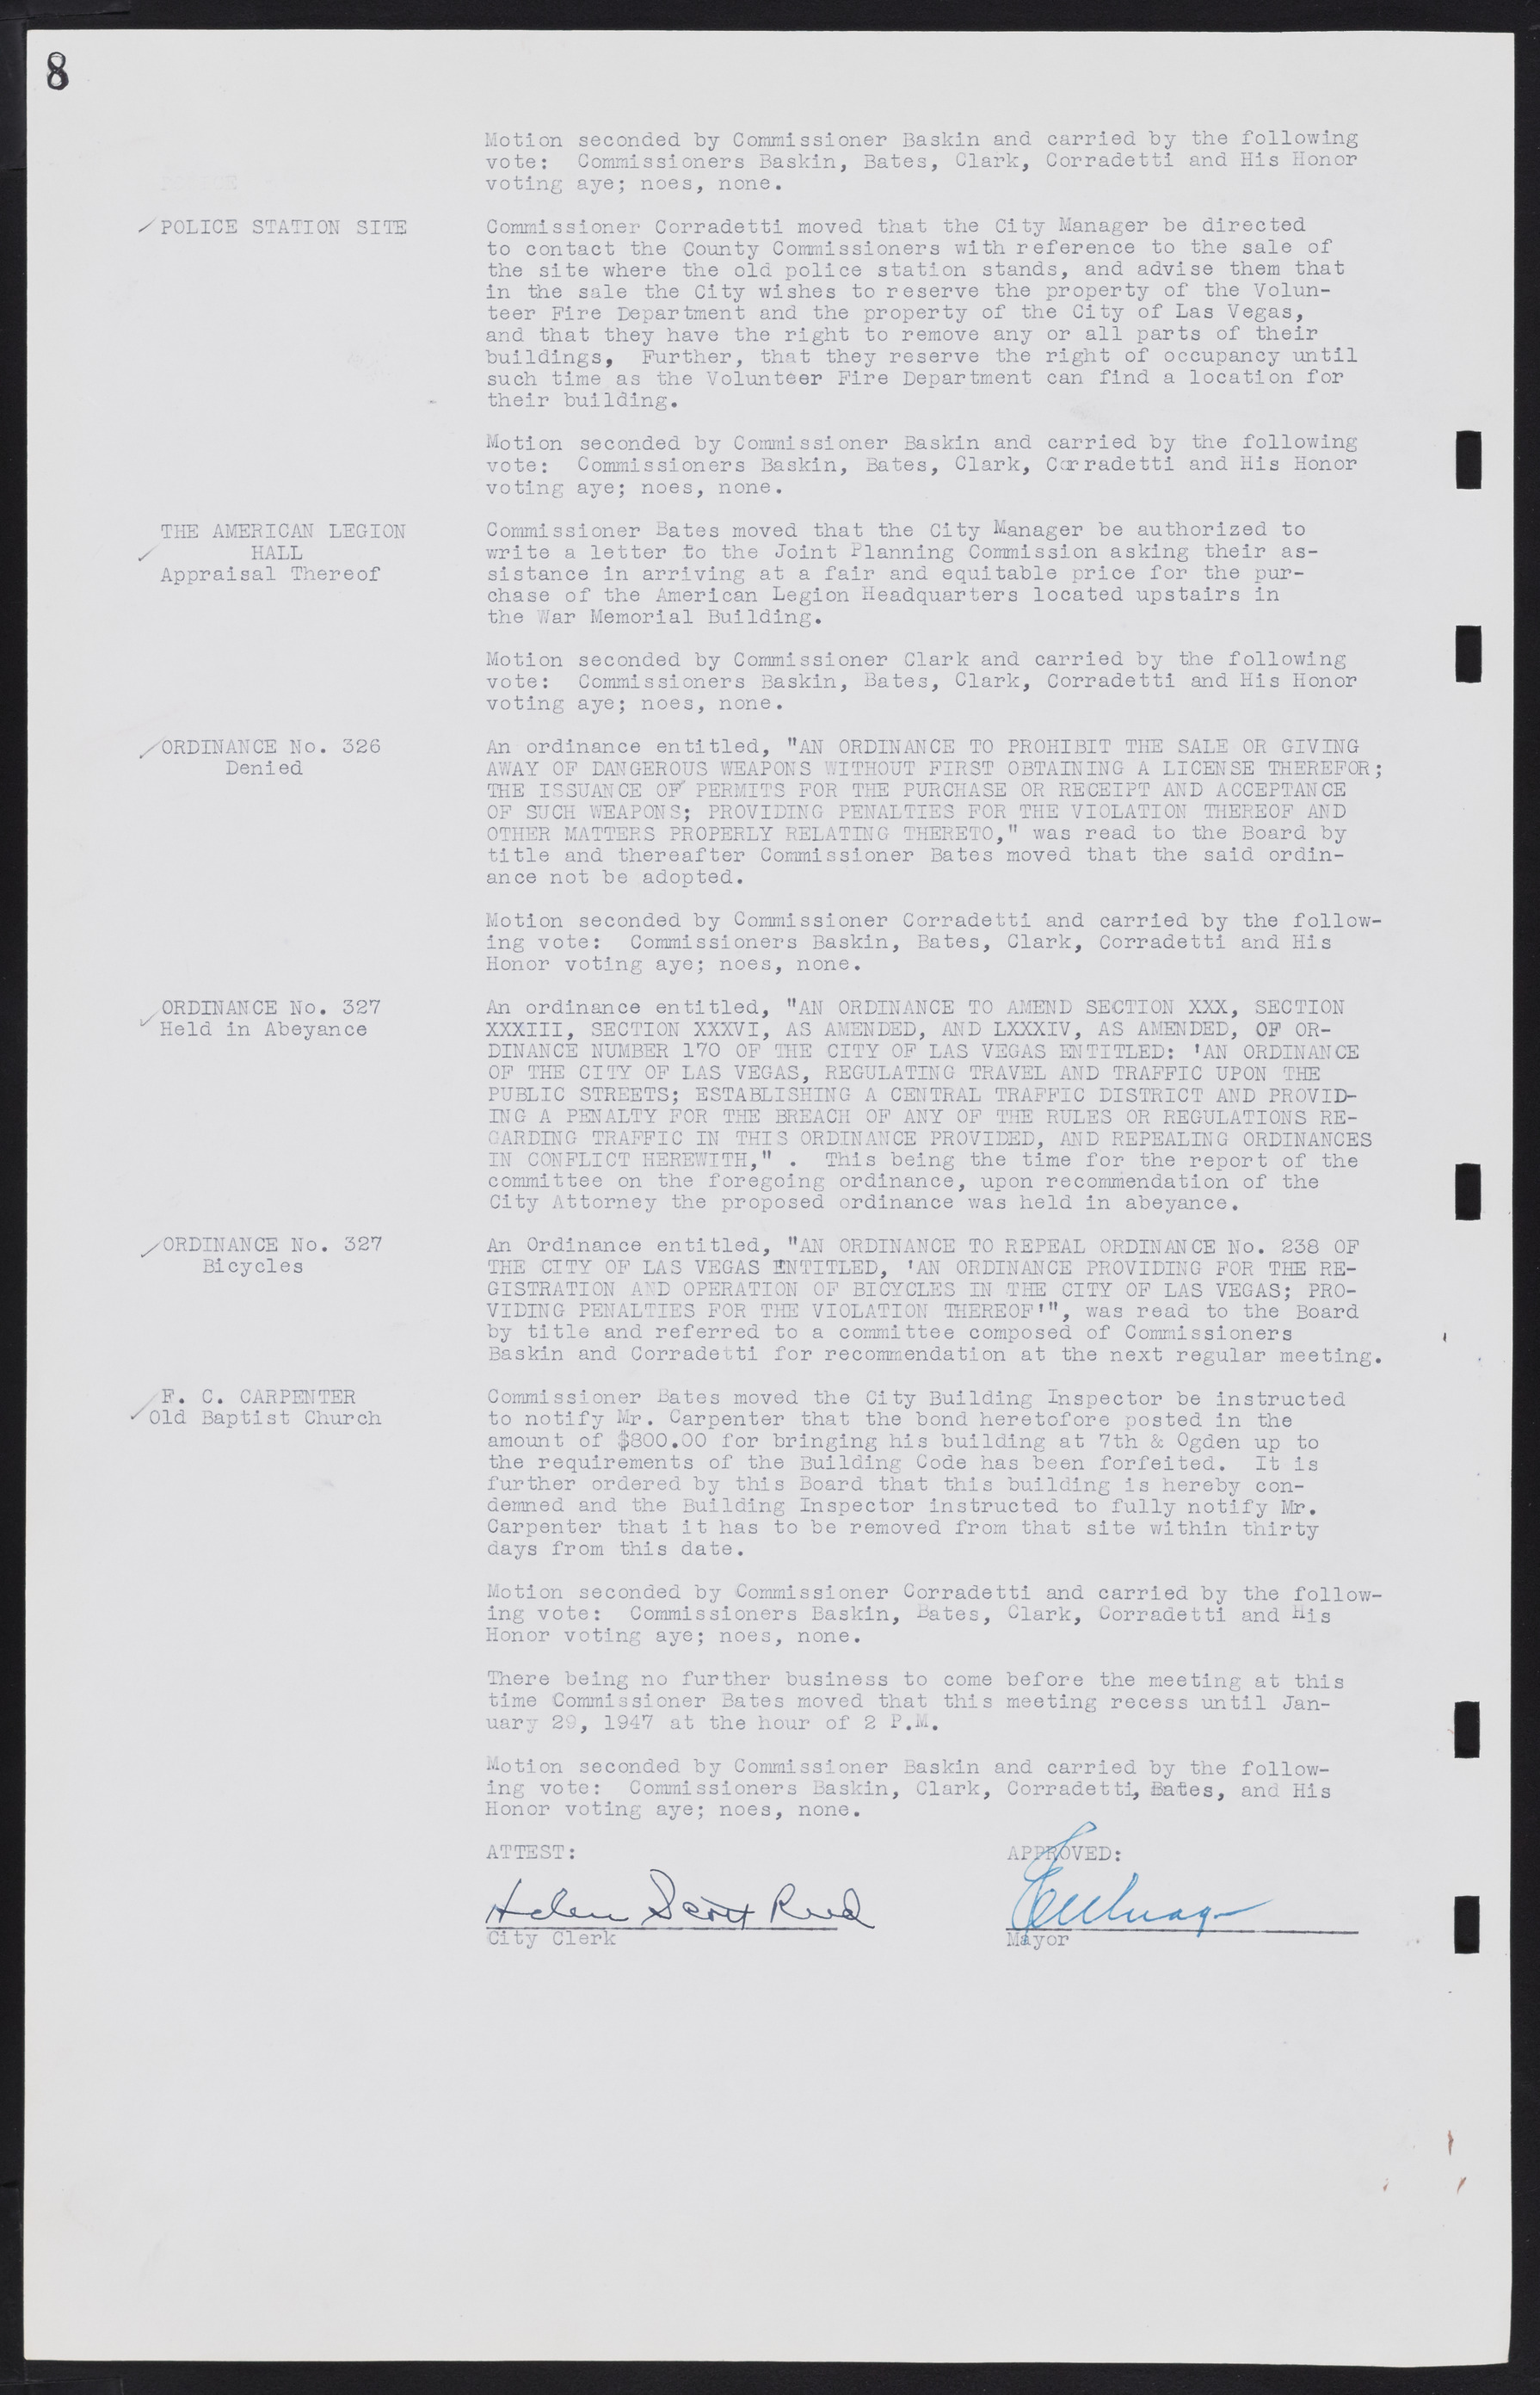 Las Vegas City Commission Minutes, January 7, 1947 to October 26, 1949, lvc000006-16